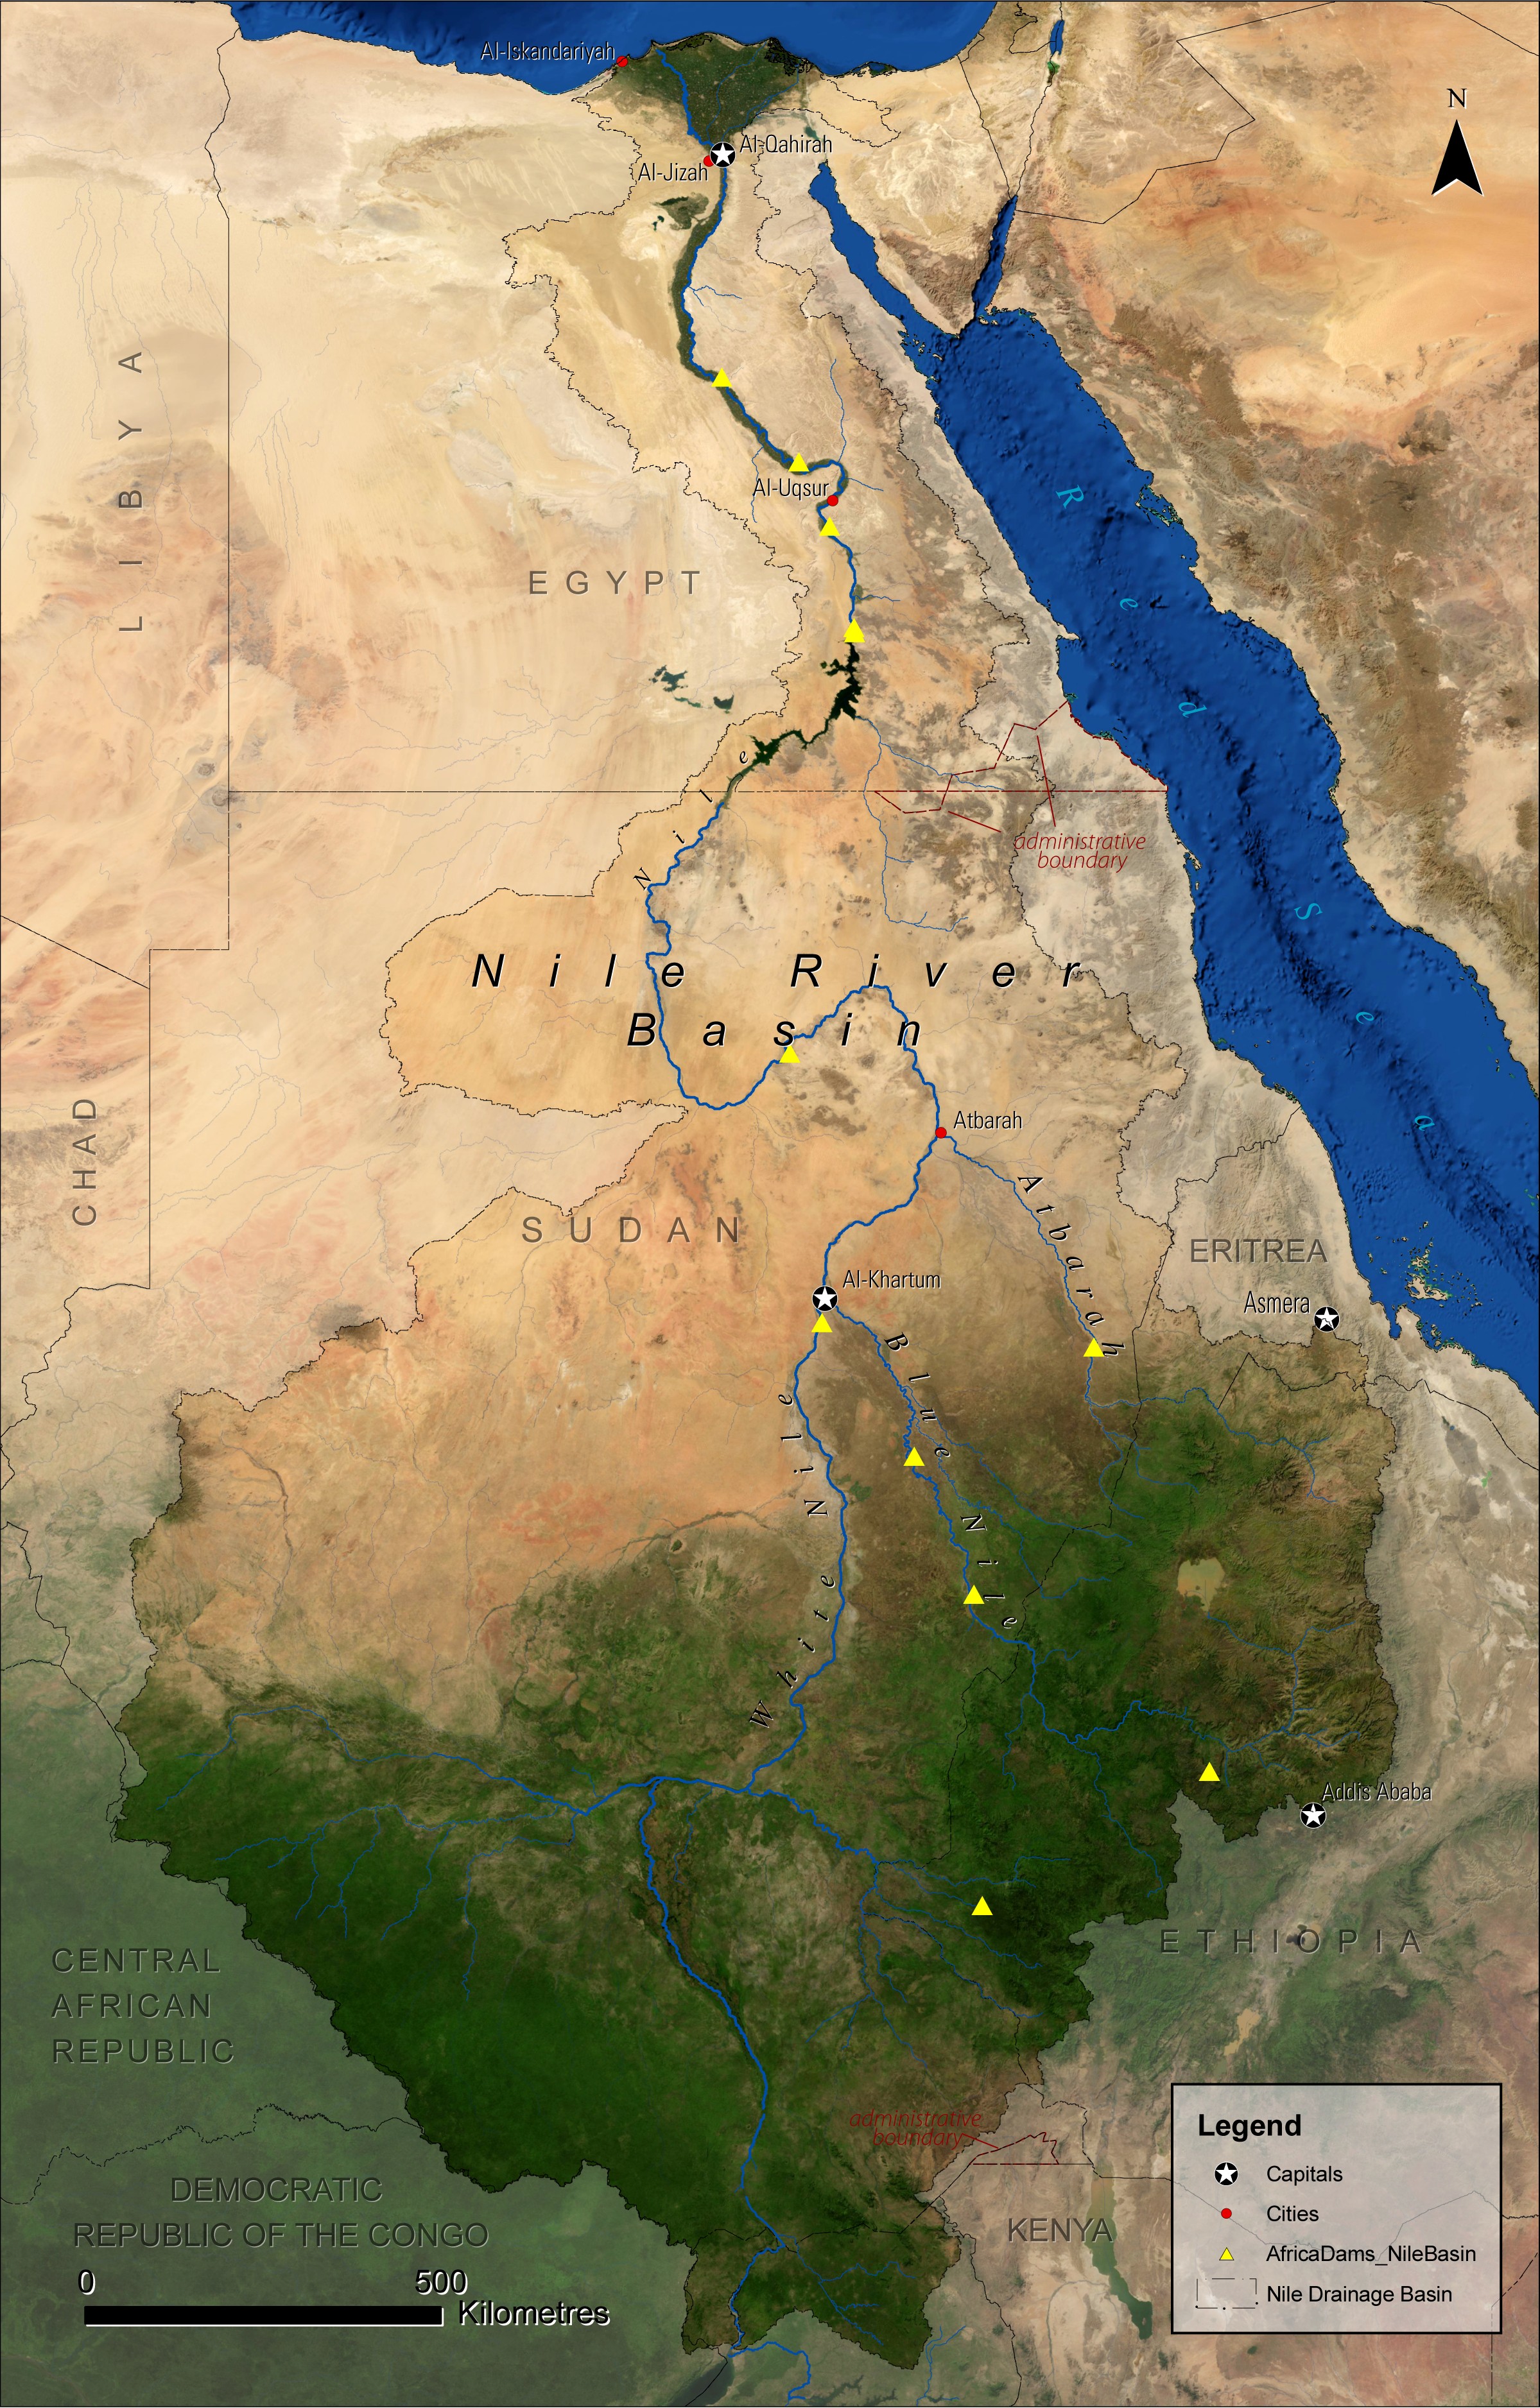 (Nile River)